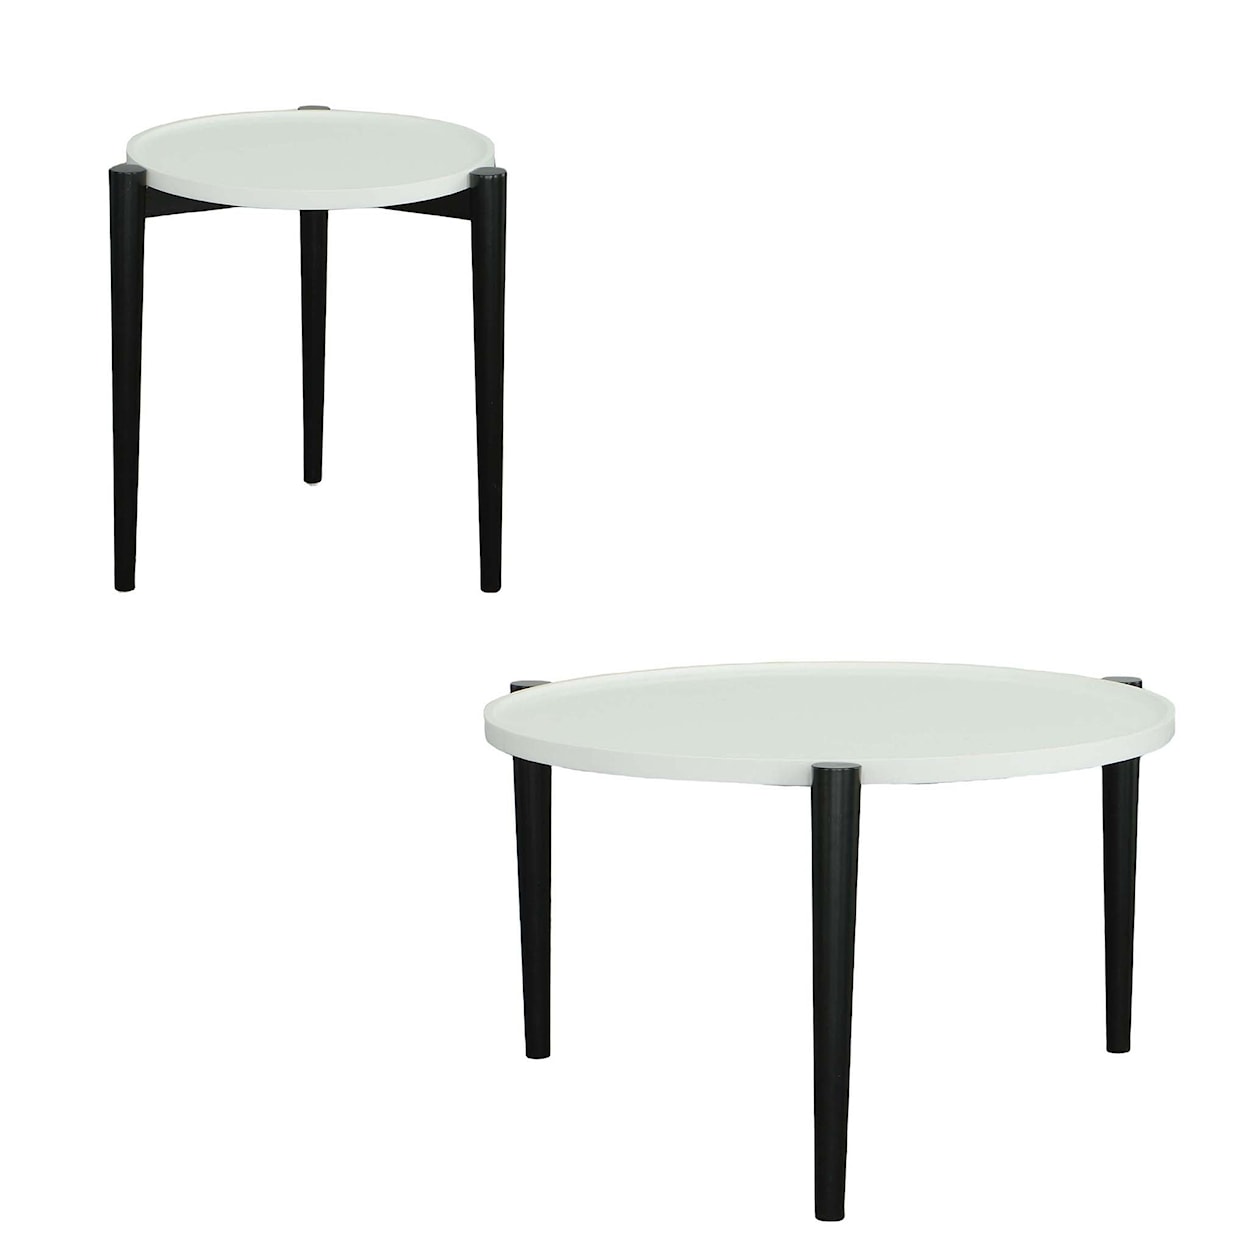 Progressive Furniture Harlow Round Cocktail Table